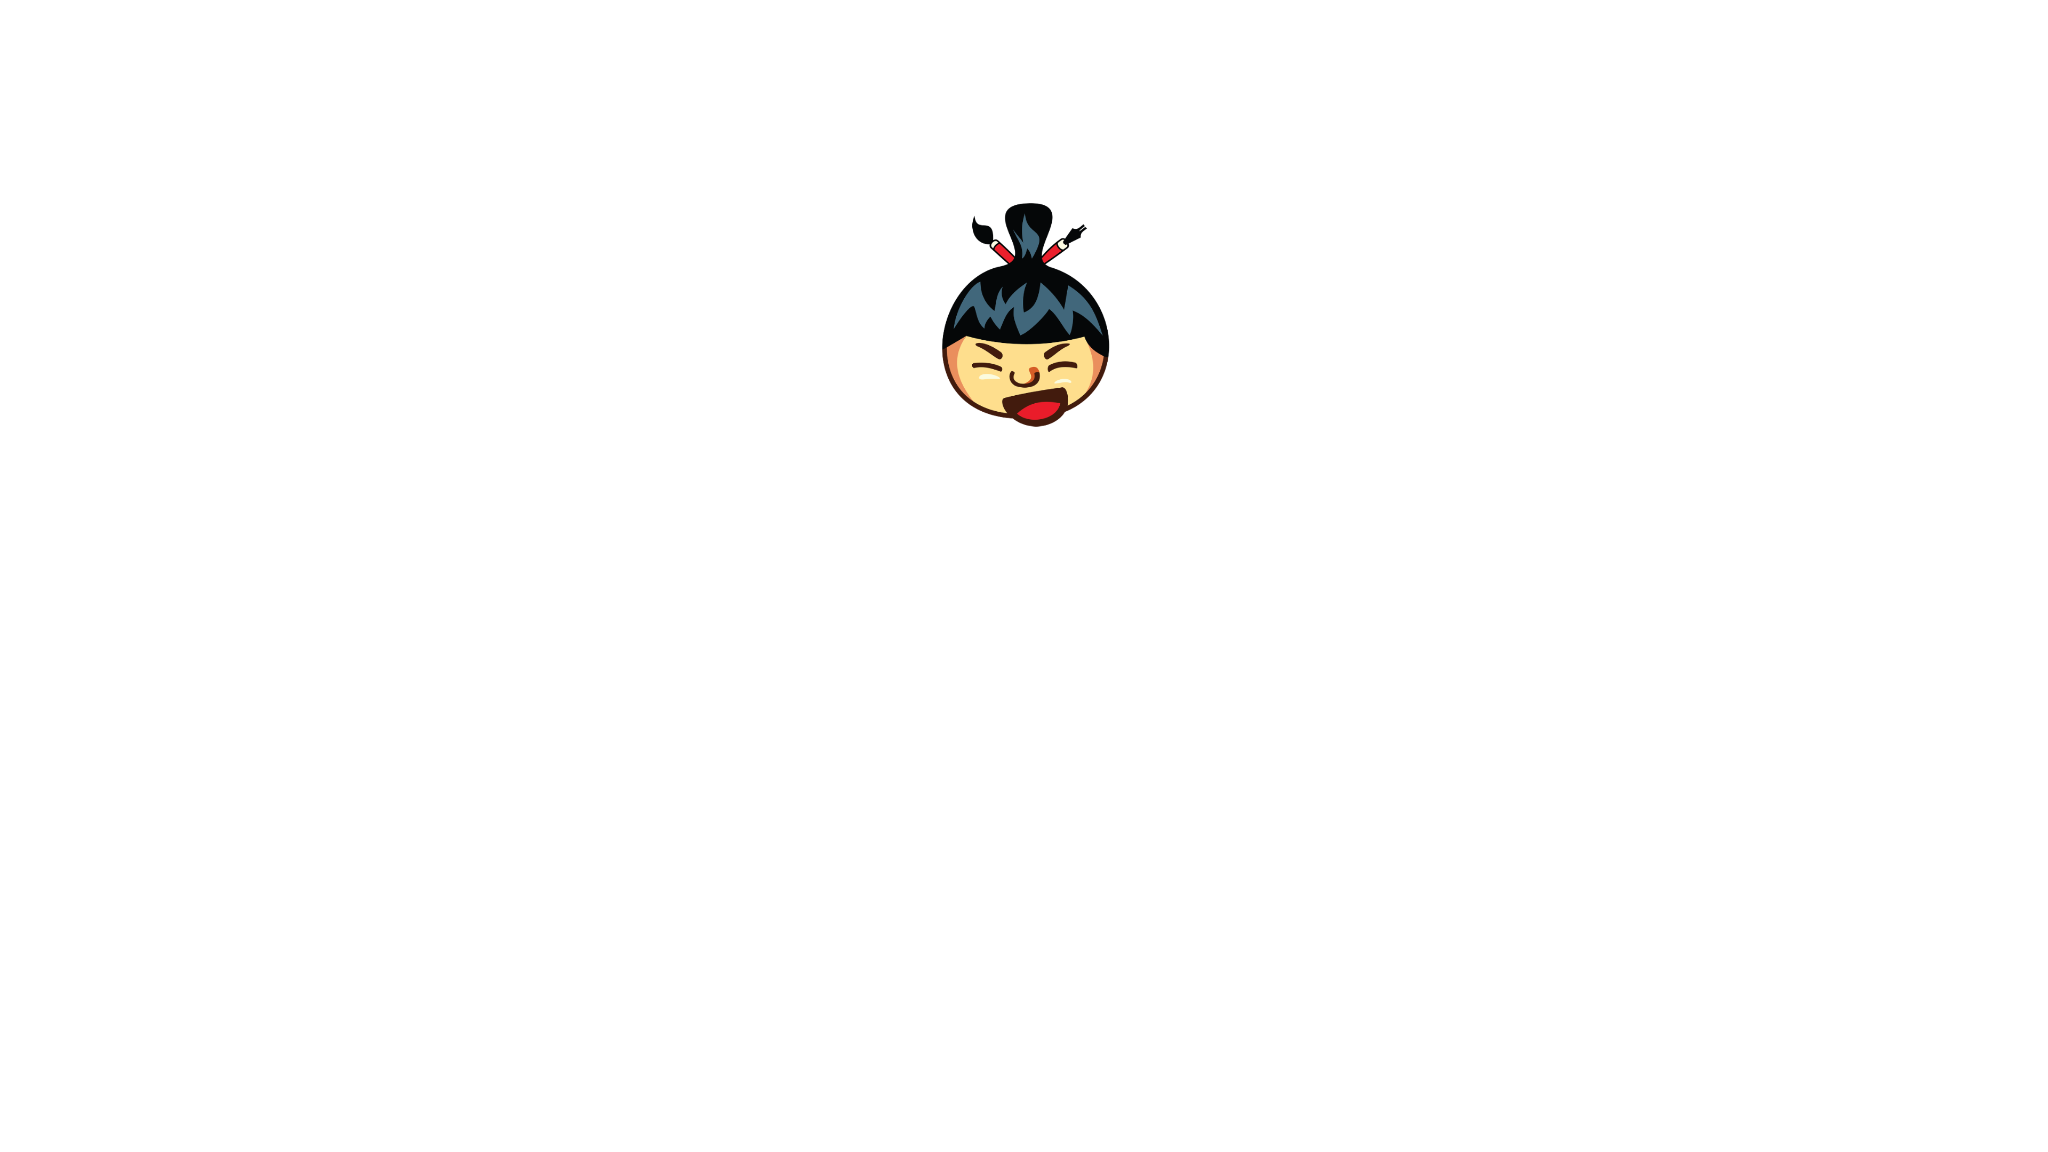 Sumo Video Intro - สร้างโดย Lauri Koutaniemi ด้วย paint